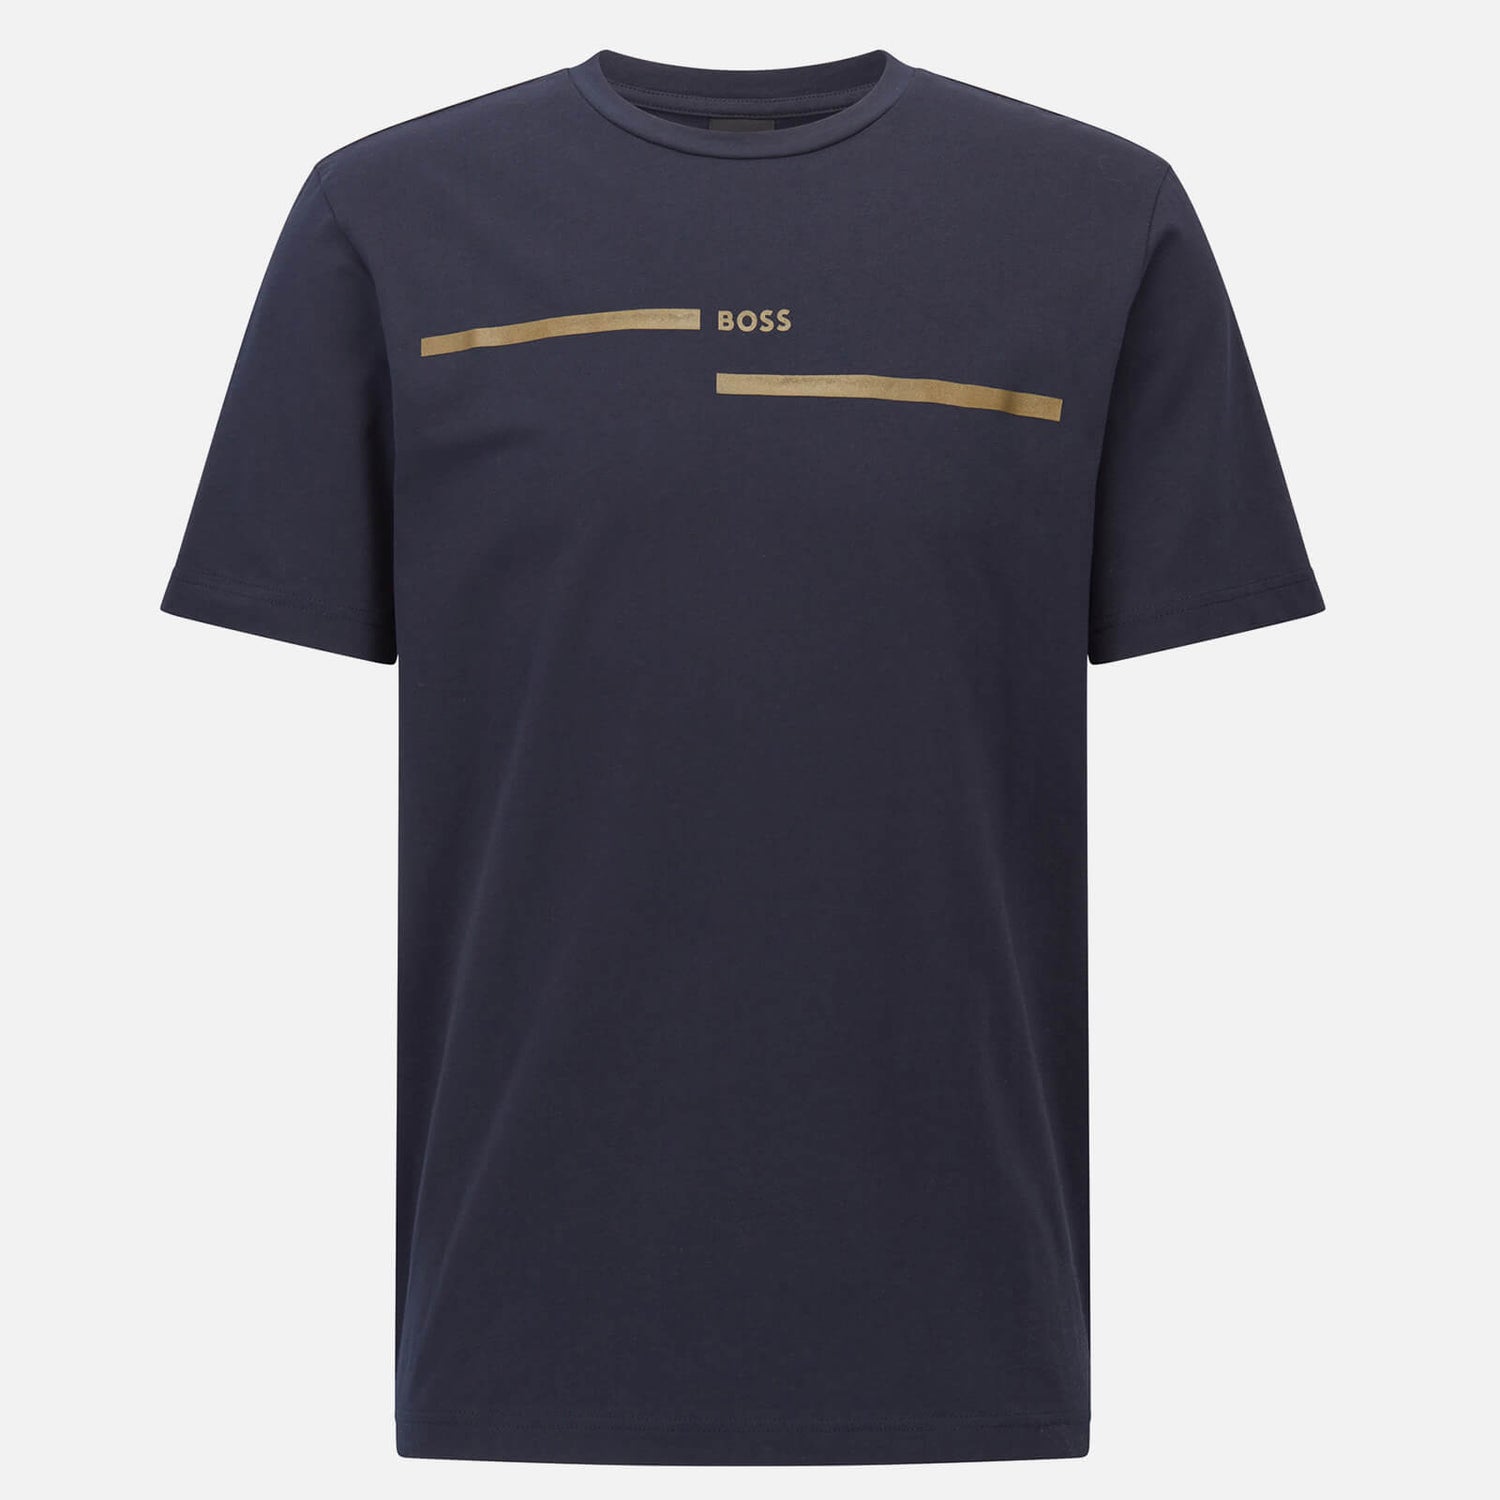 BOSS Athleisure Men's T-Shirt 4 - Dark Blue - S